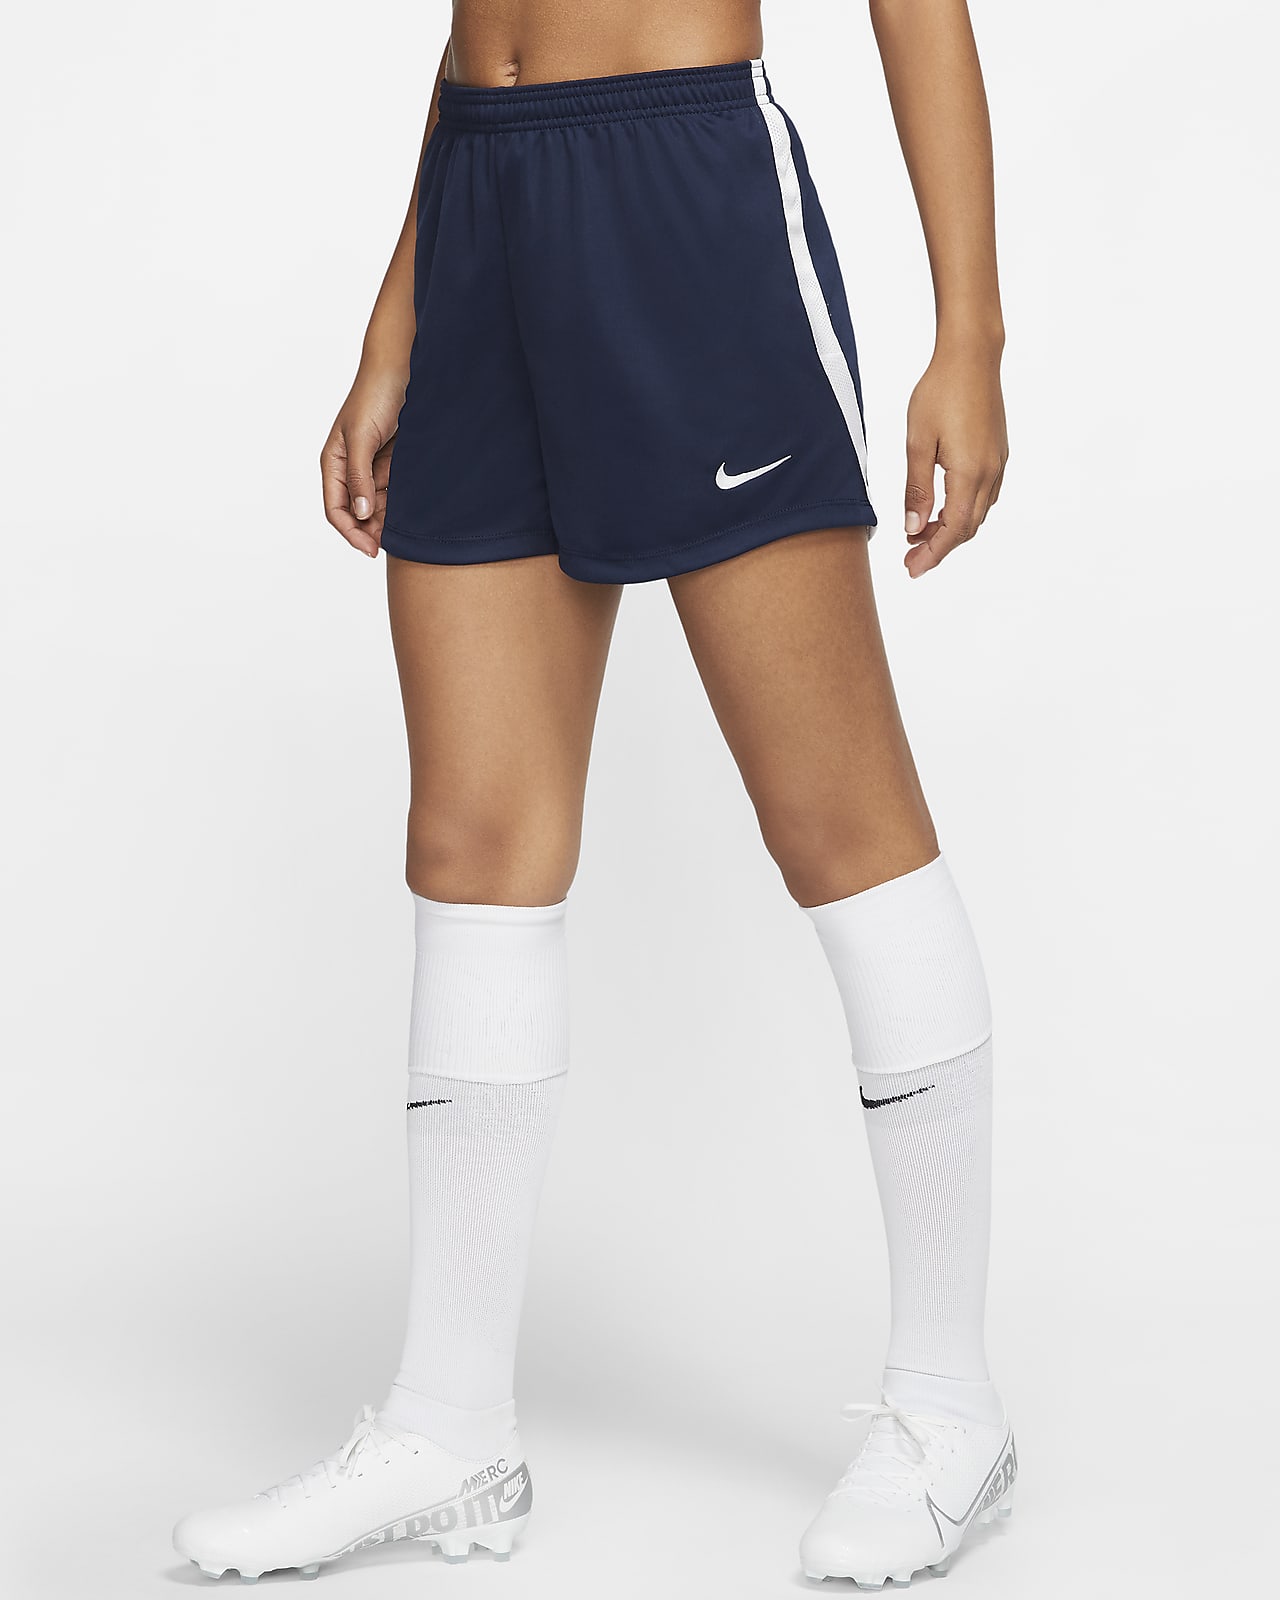 black nike soccer shorts with white stripe